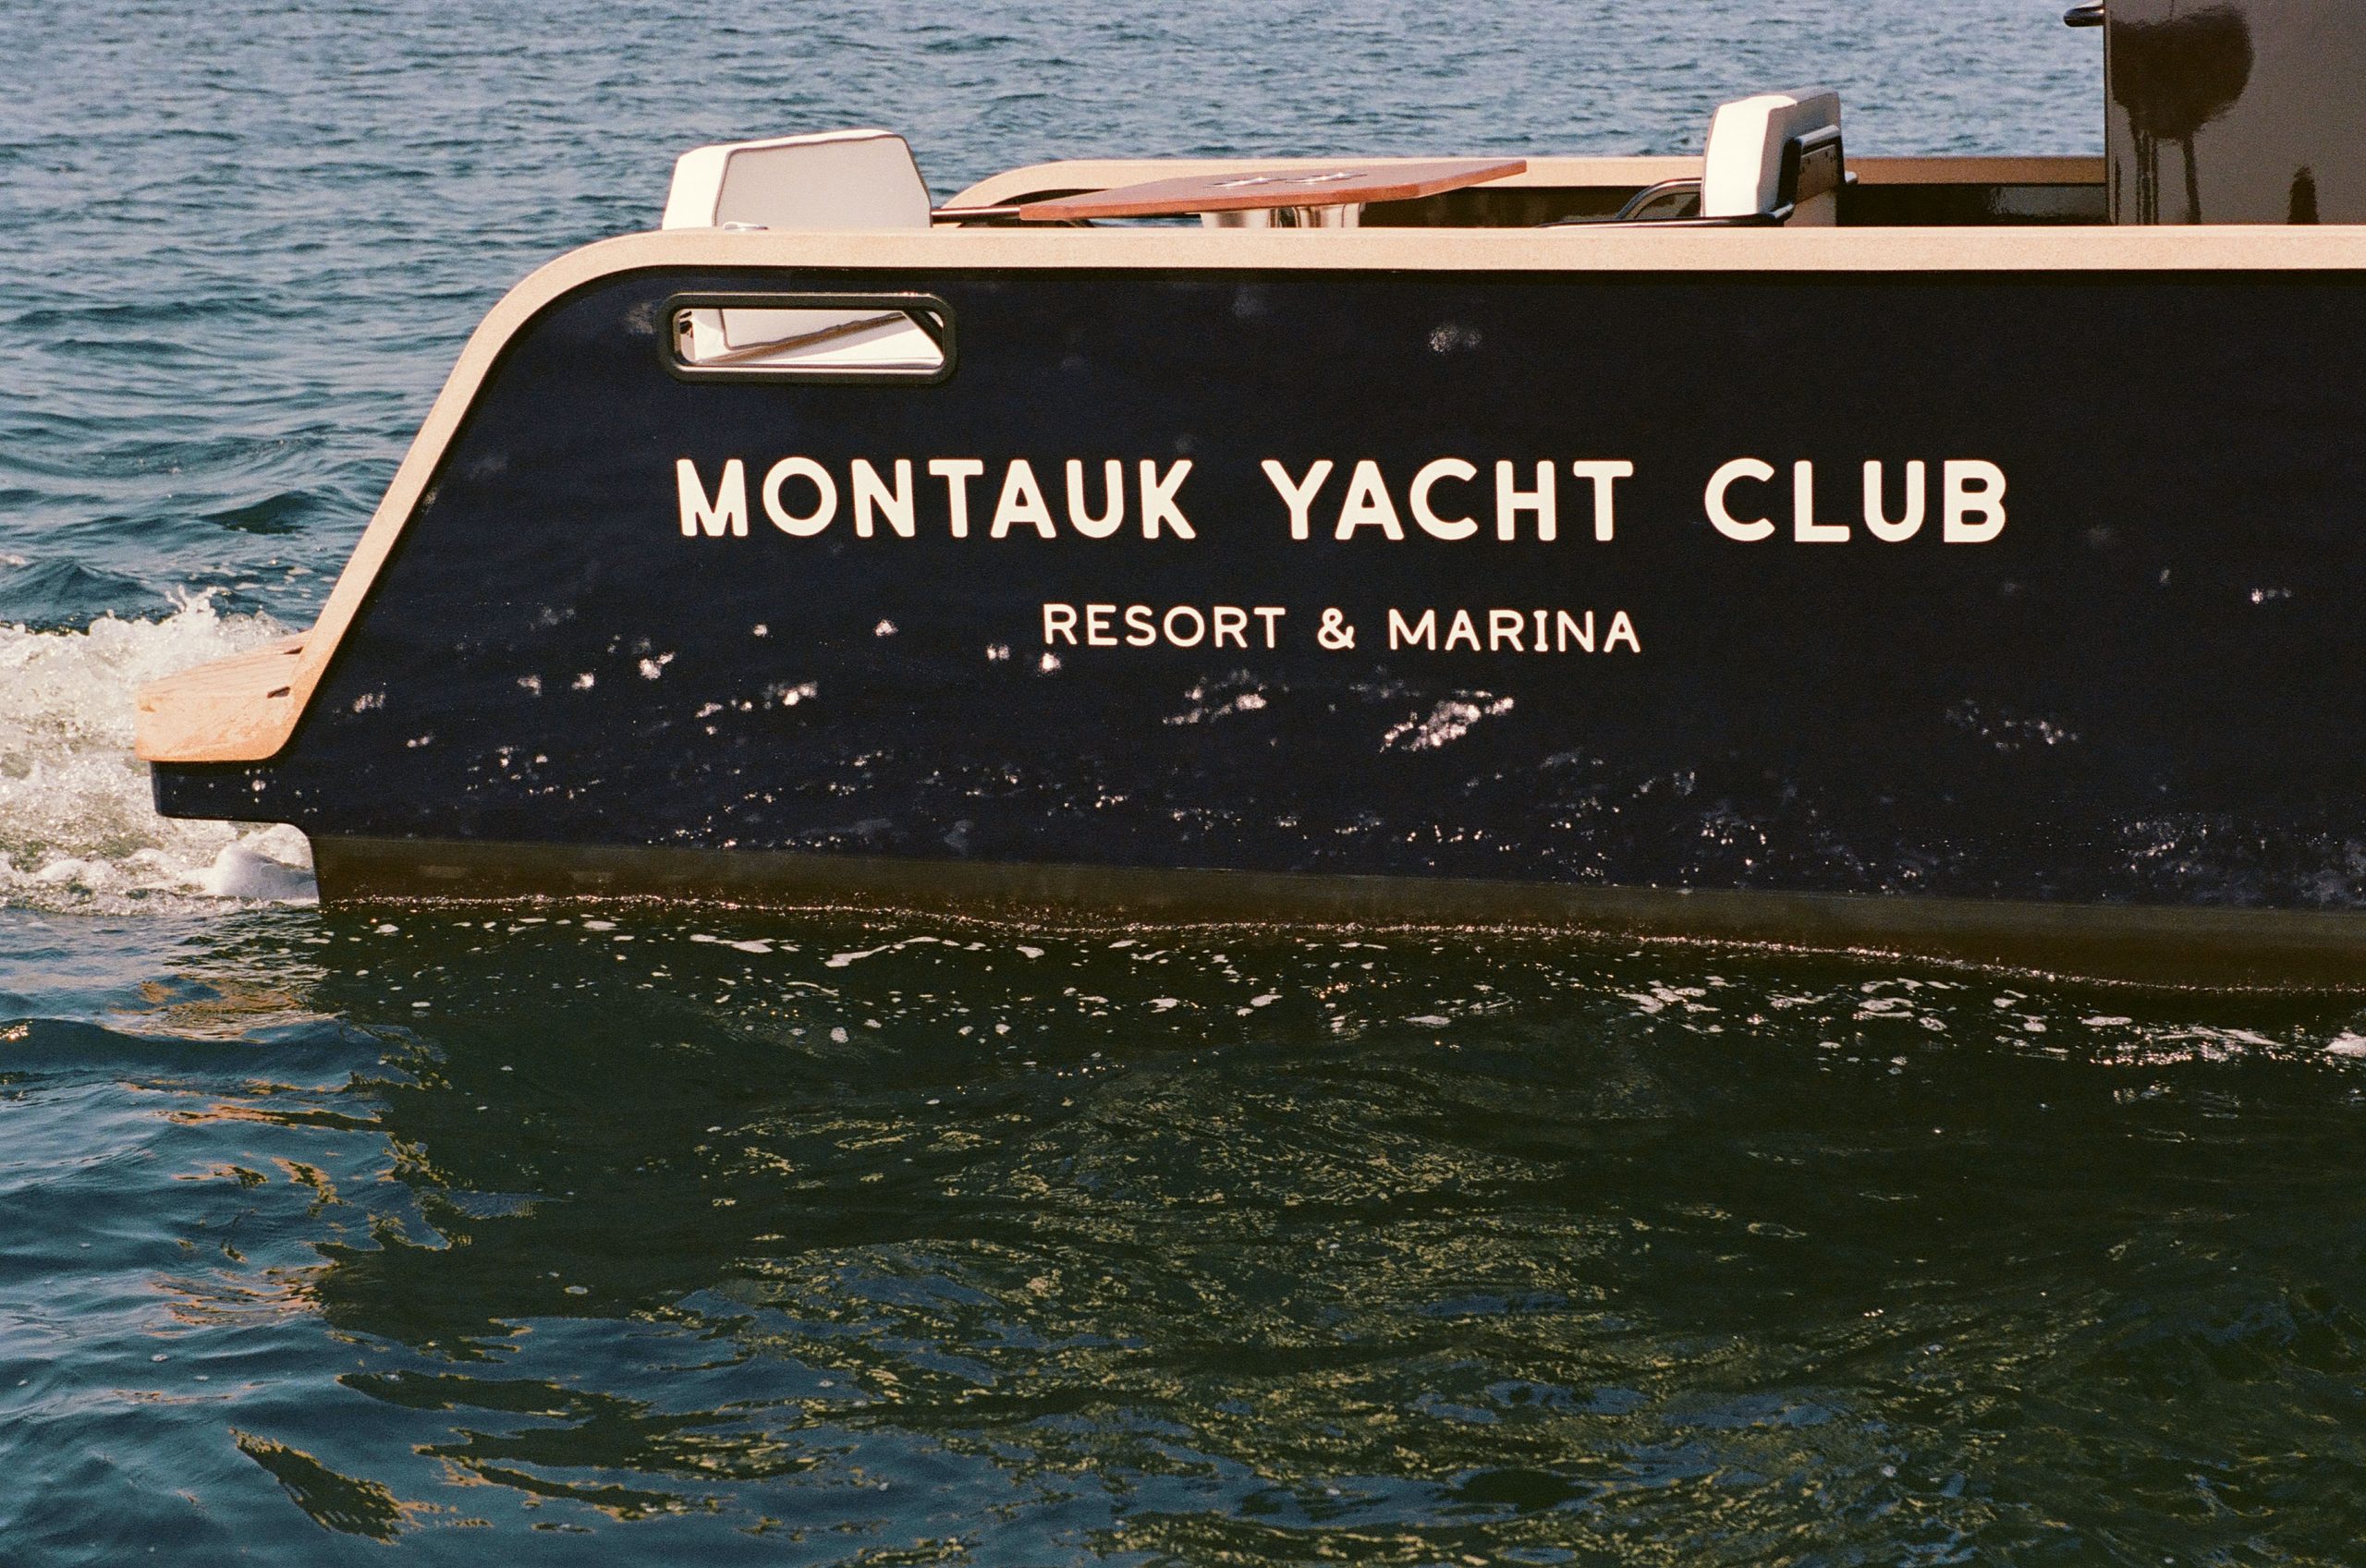 A yacht named "MONTAUK YACHT CLUB - RESORT & MARINA" rolls on the sea.